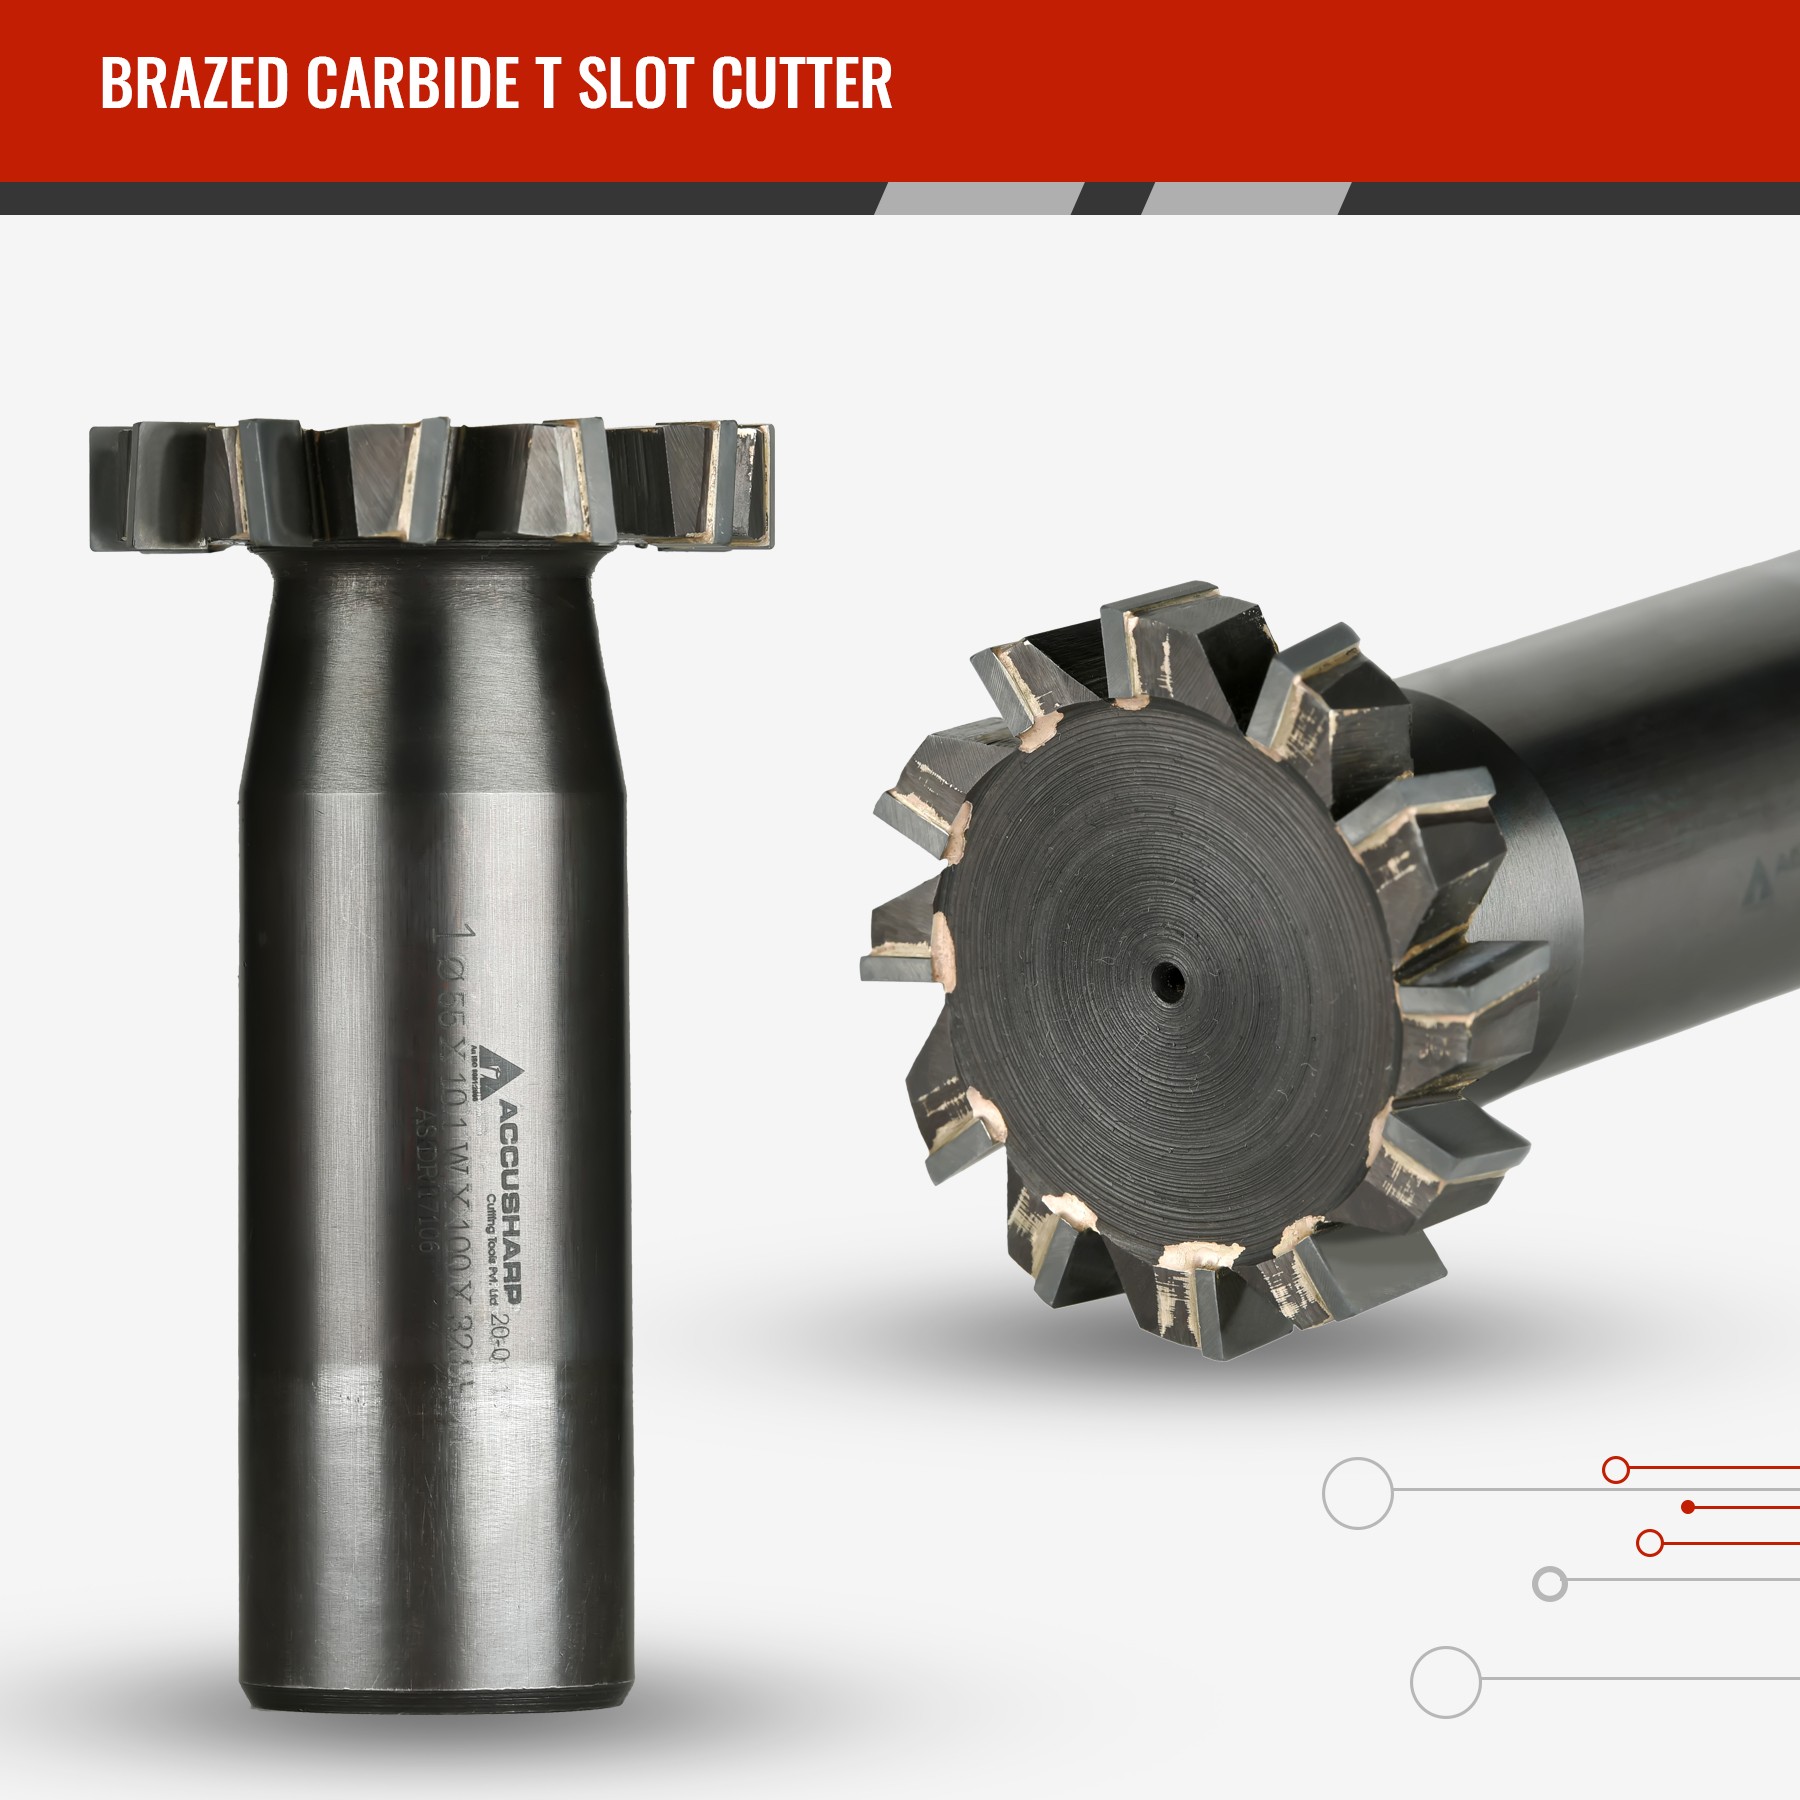 Brazed Carbide T Slot Cutters